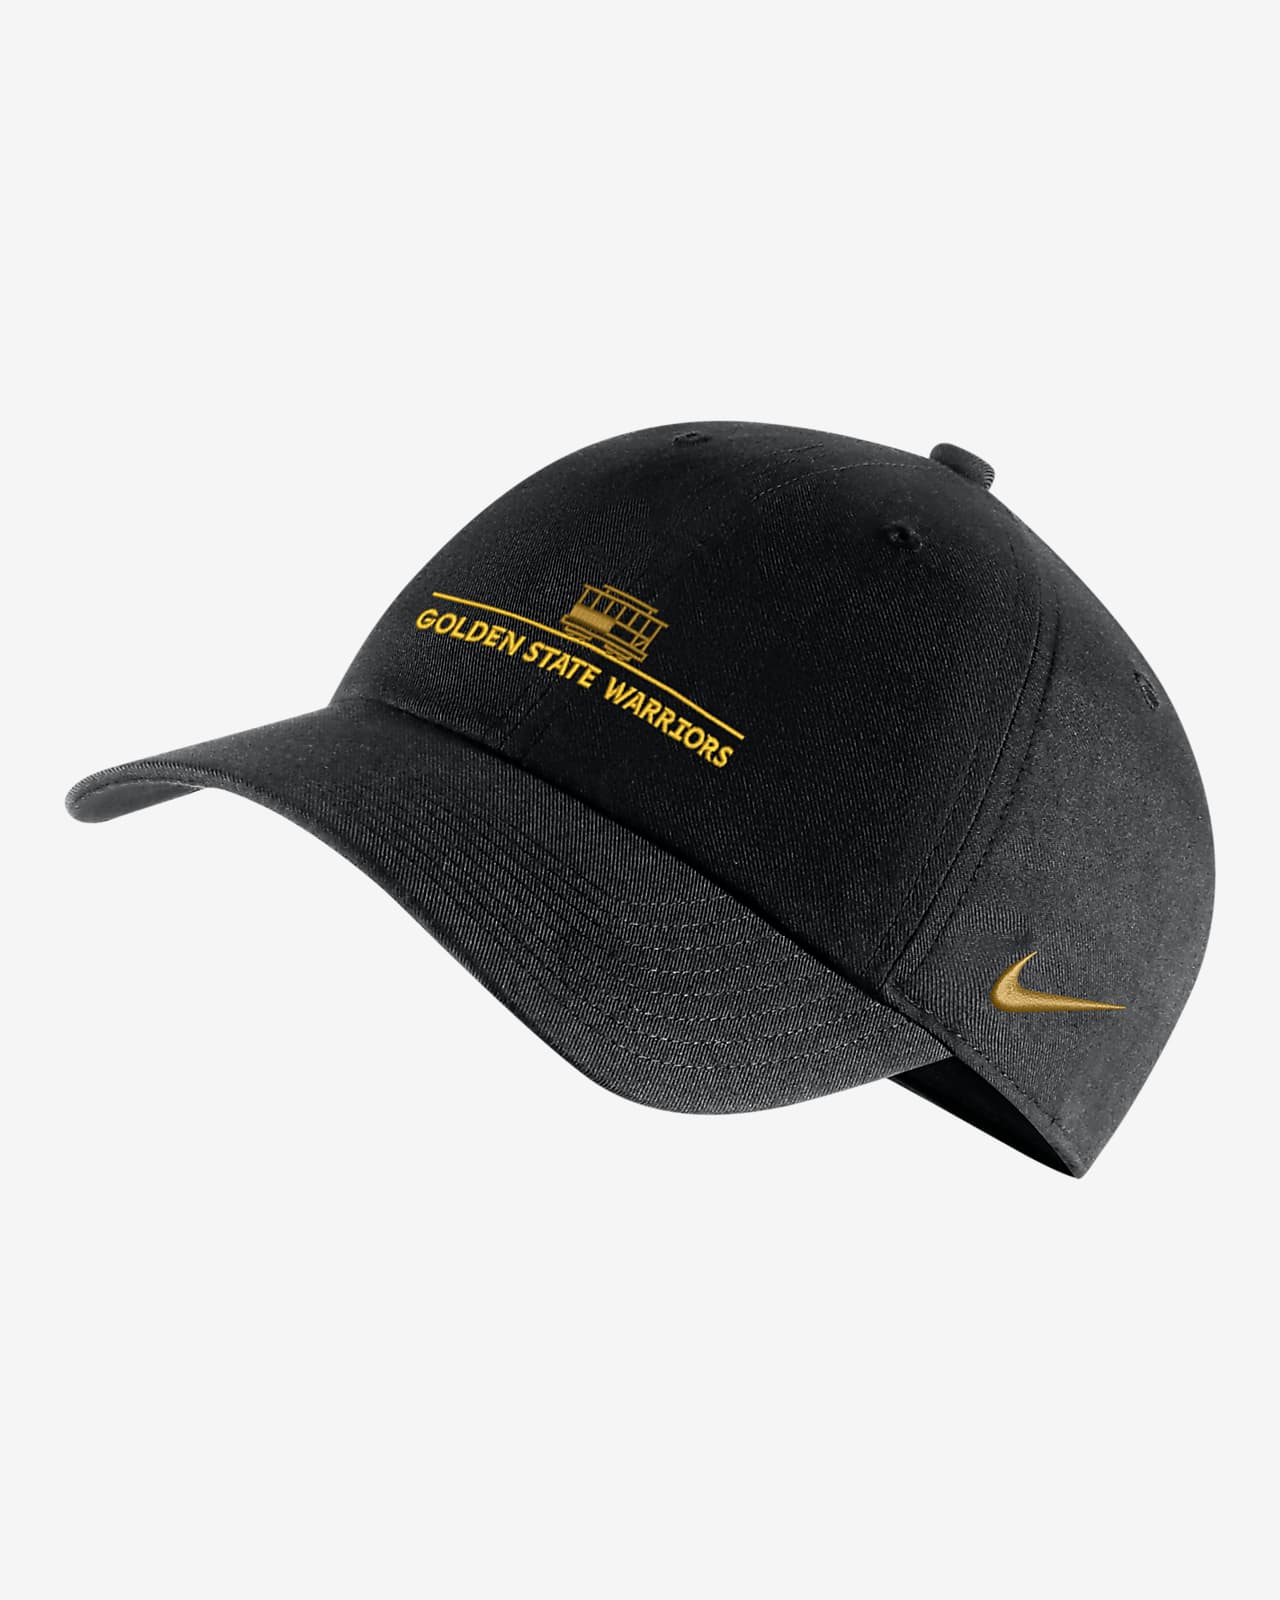 Golden State Warriors City Edition Nike NBA Adjustable Cap